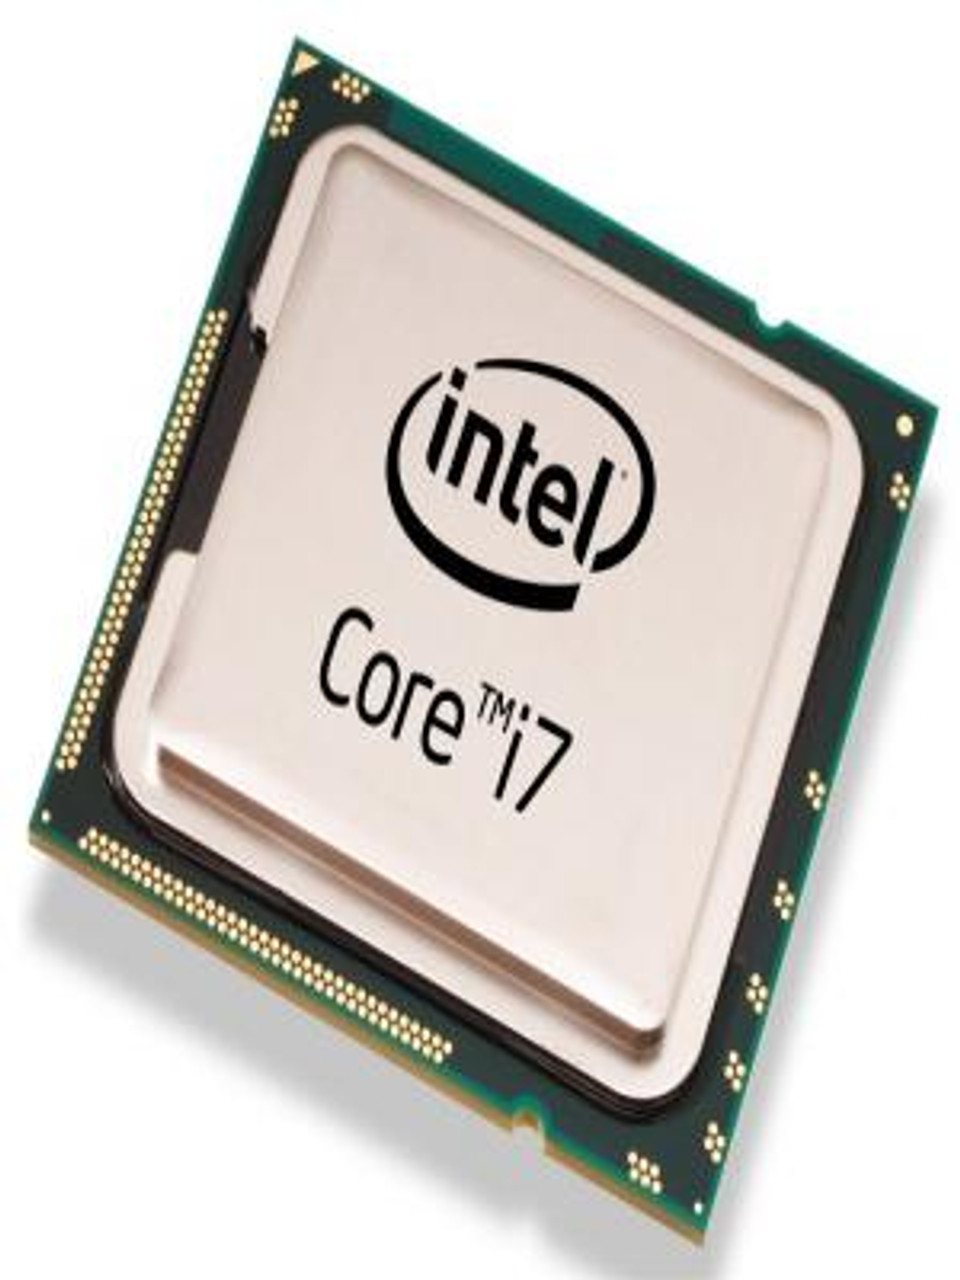 Intel Core i7-2600 3.4GHz Desktop OEM CPU SR00B CM8062300834302